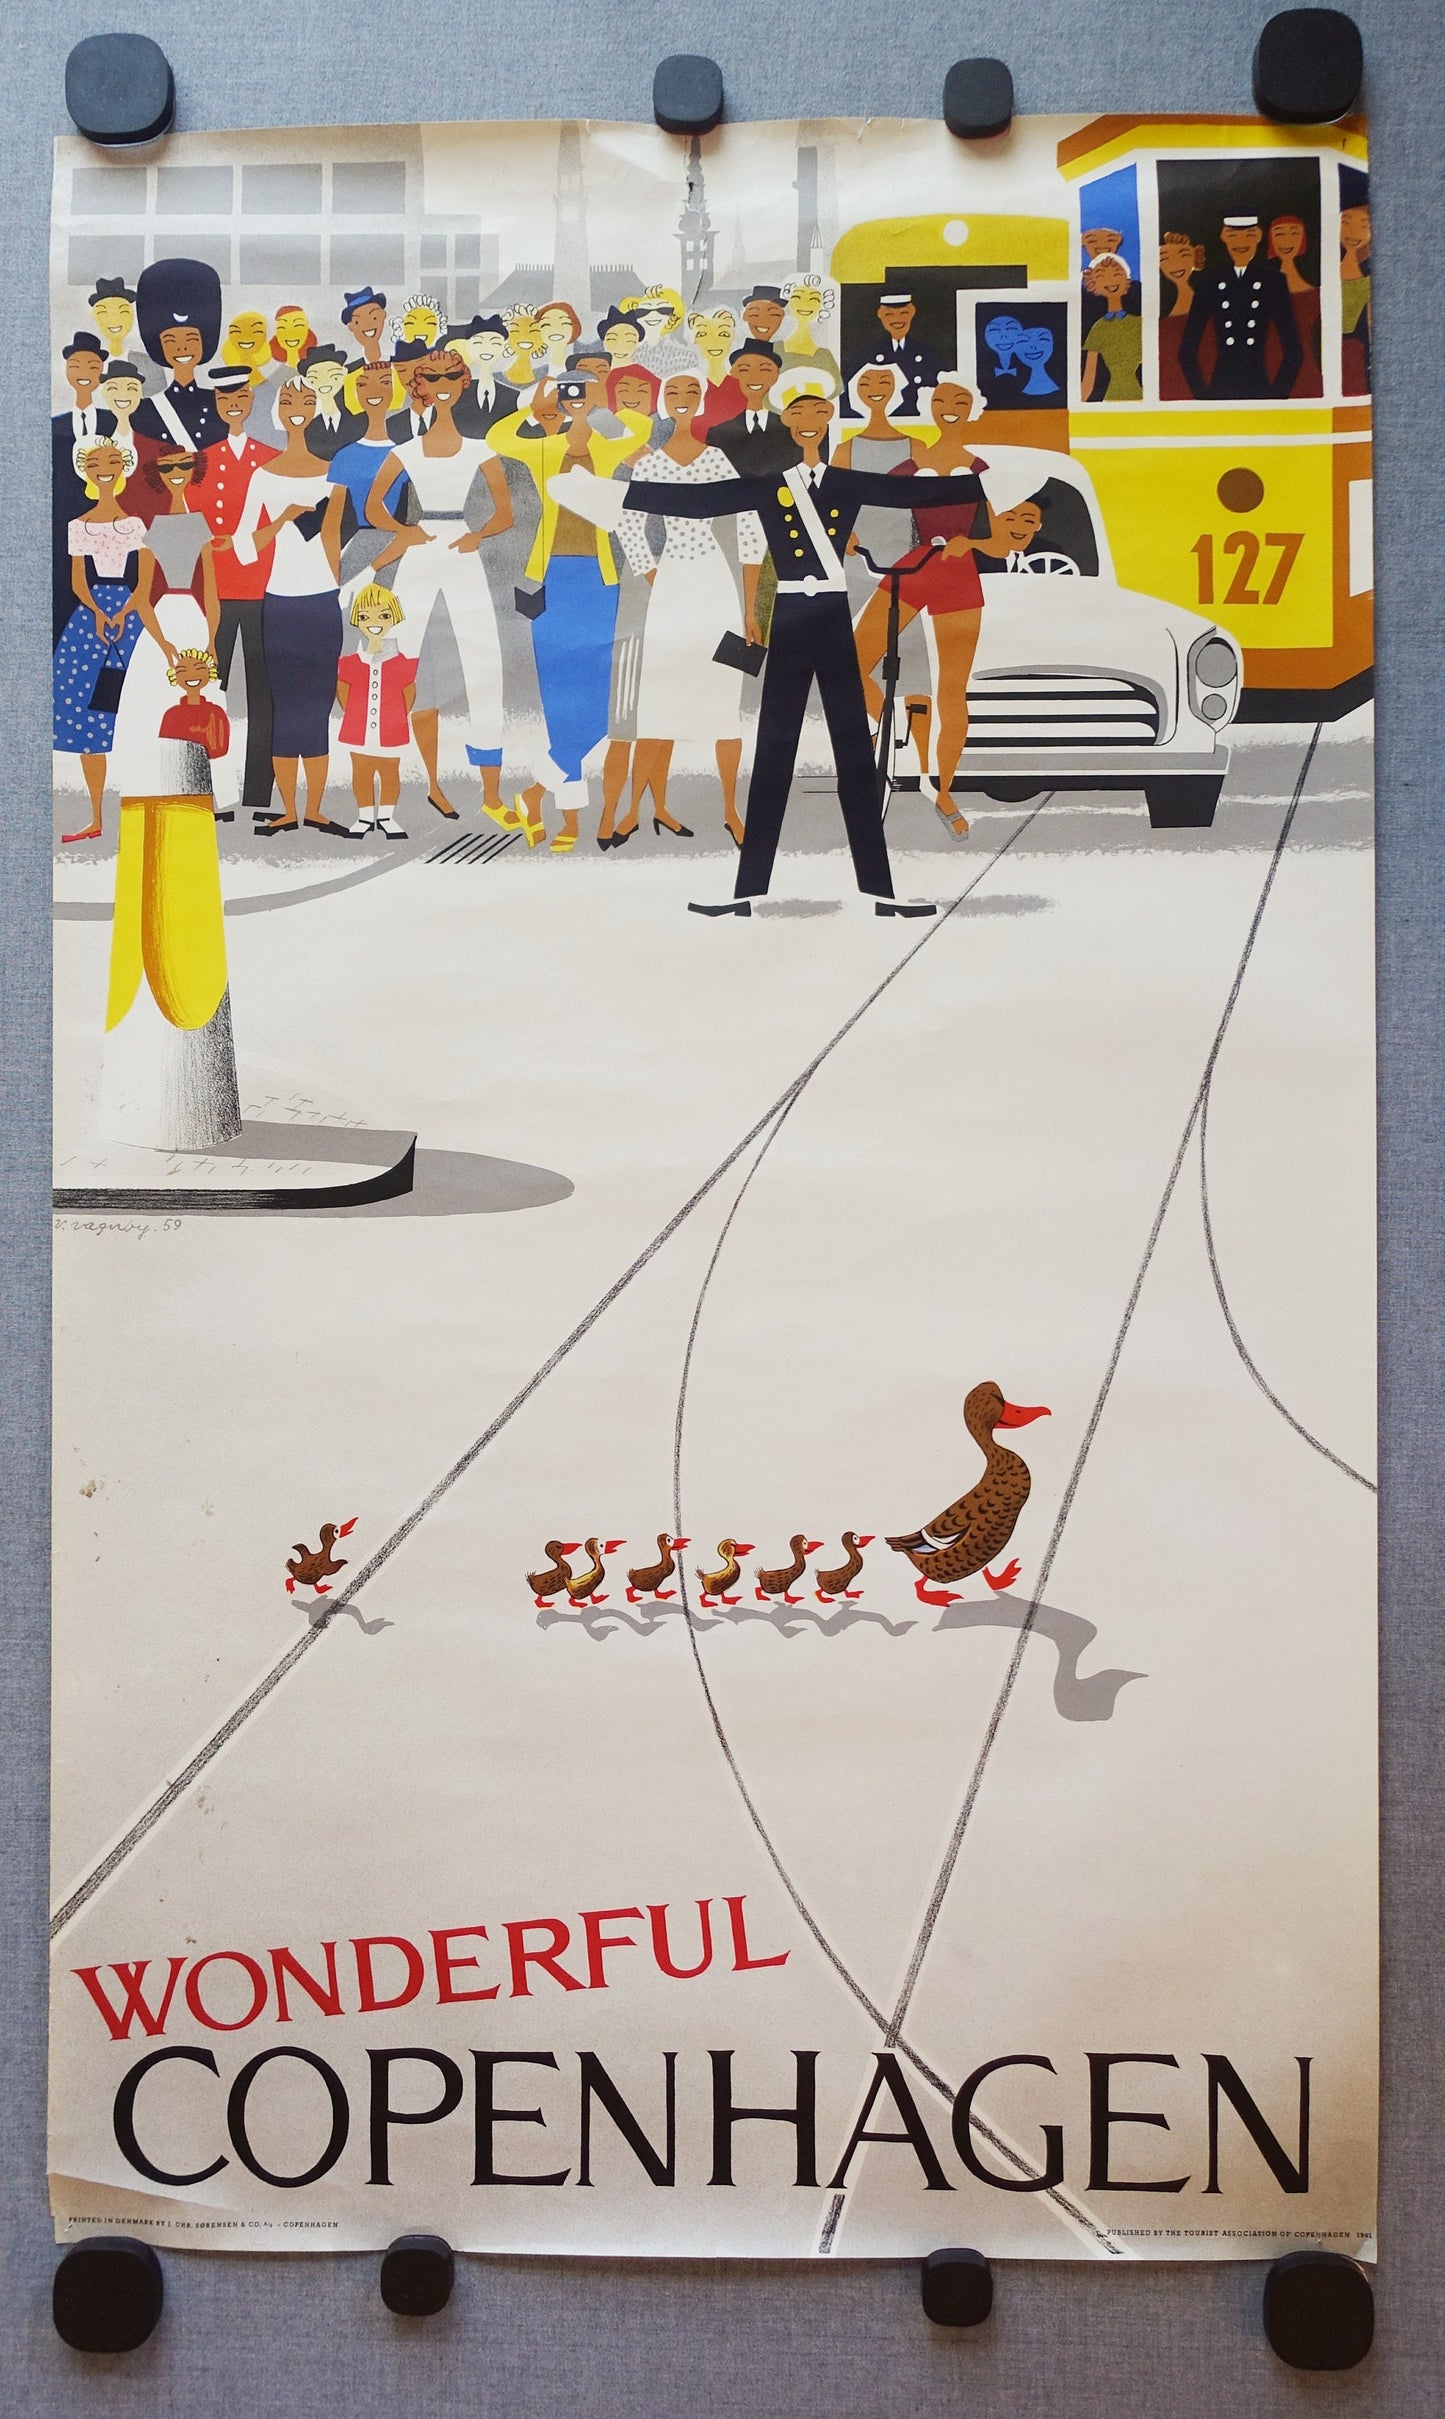 1961 Wonderful Copenhagen by Viggo Vagnby - Original Vintage Poster